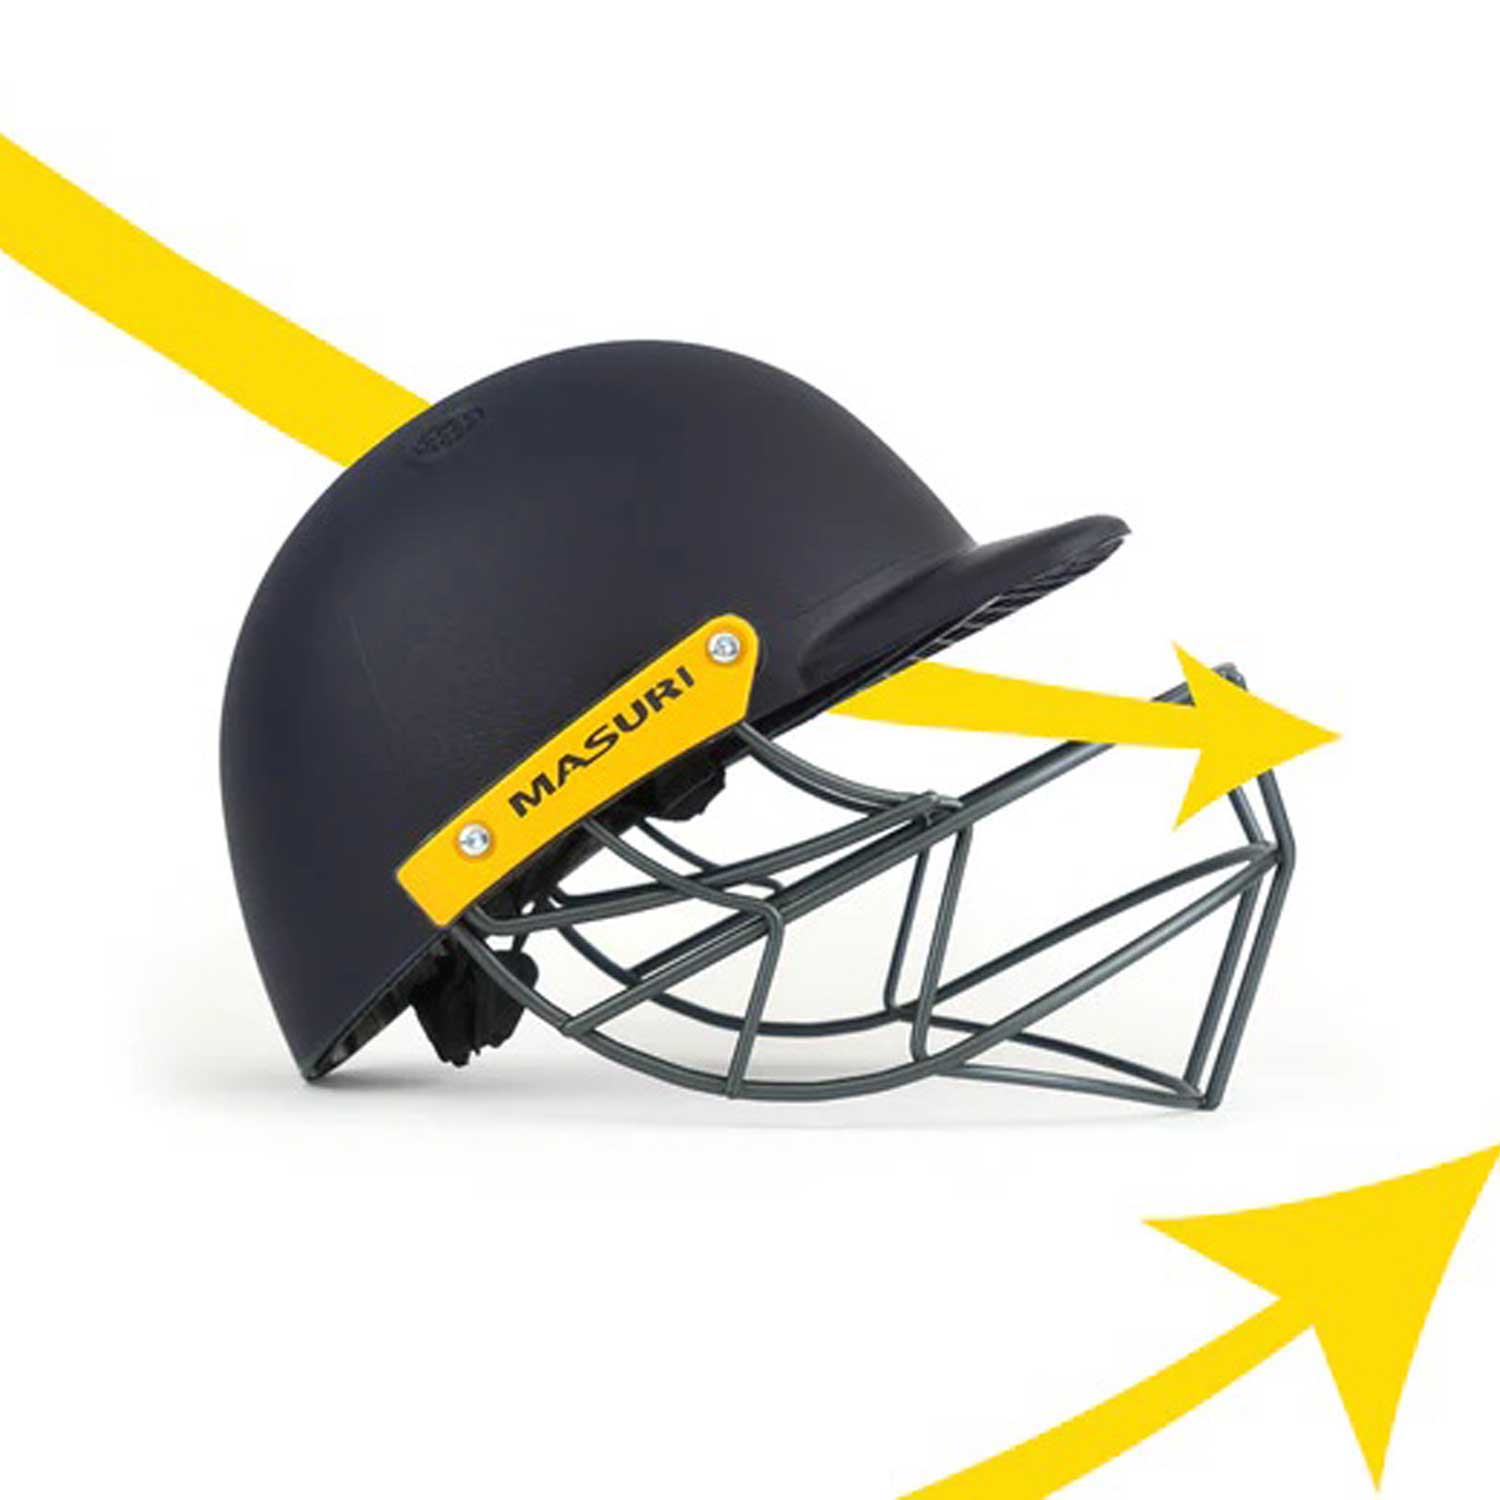 Masuri C-Line Legacy Senior Cricket Helmet